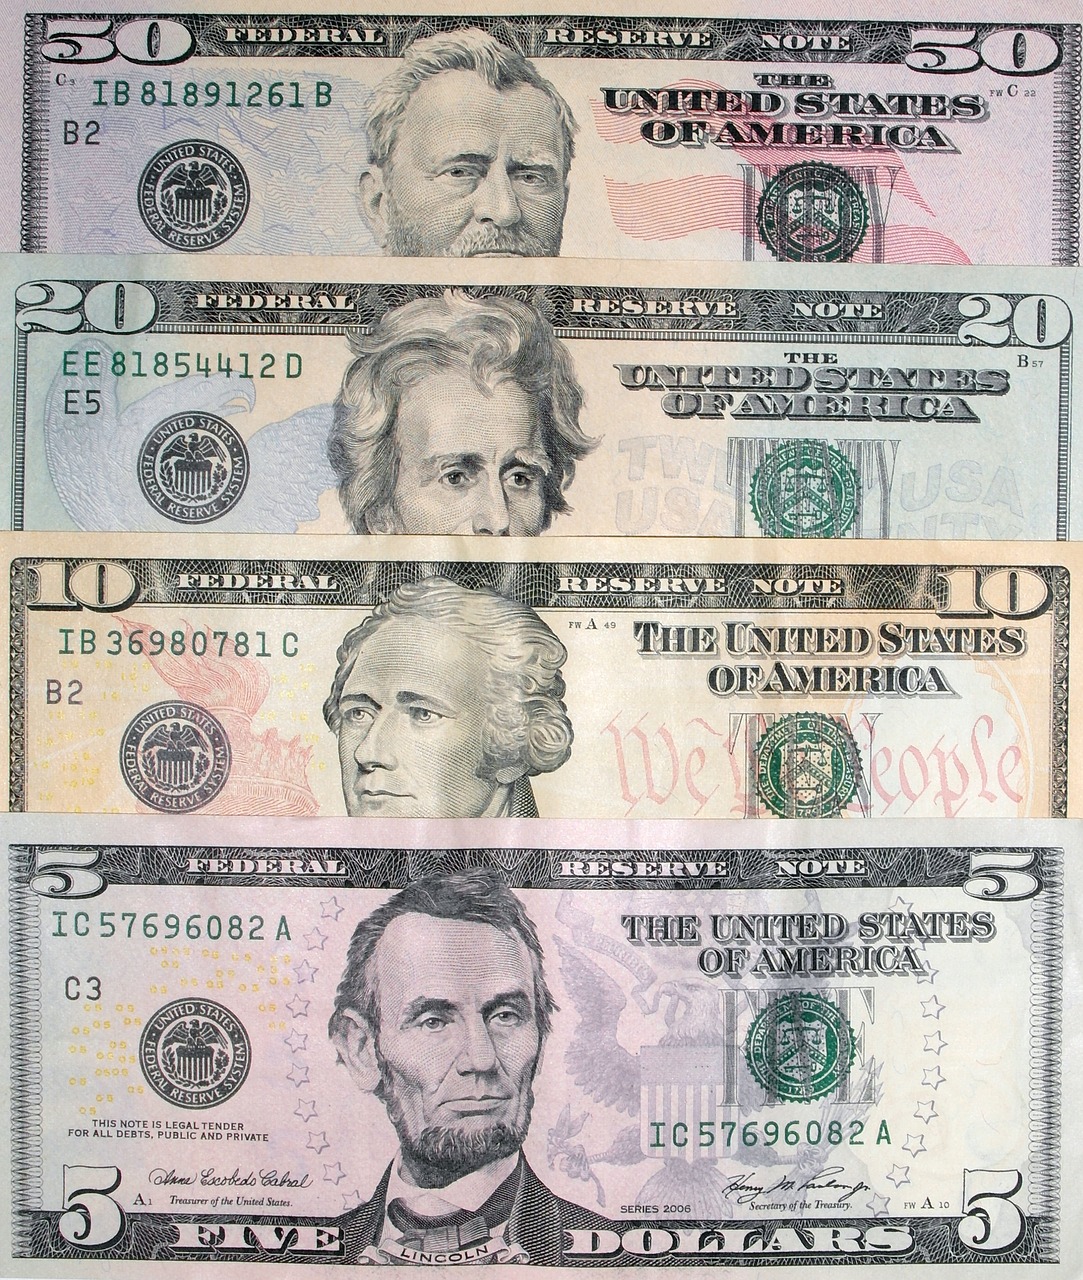 M1 Money Supply of US Dollars